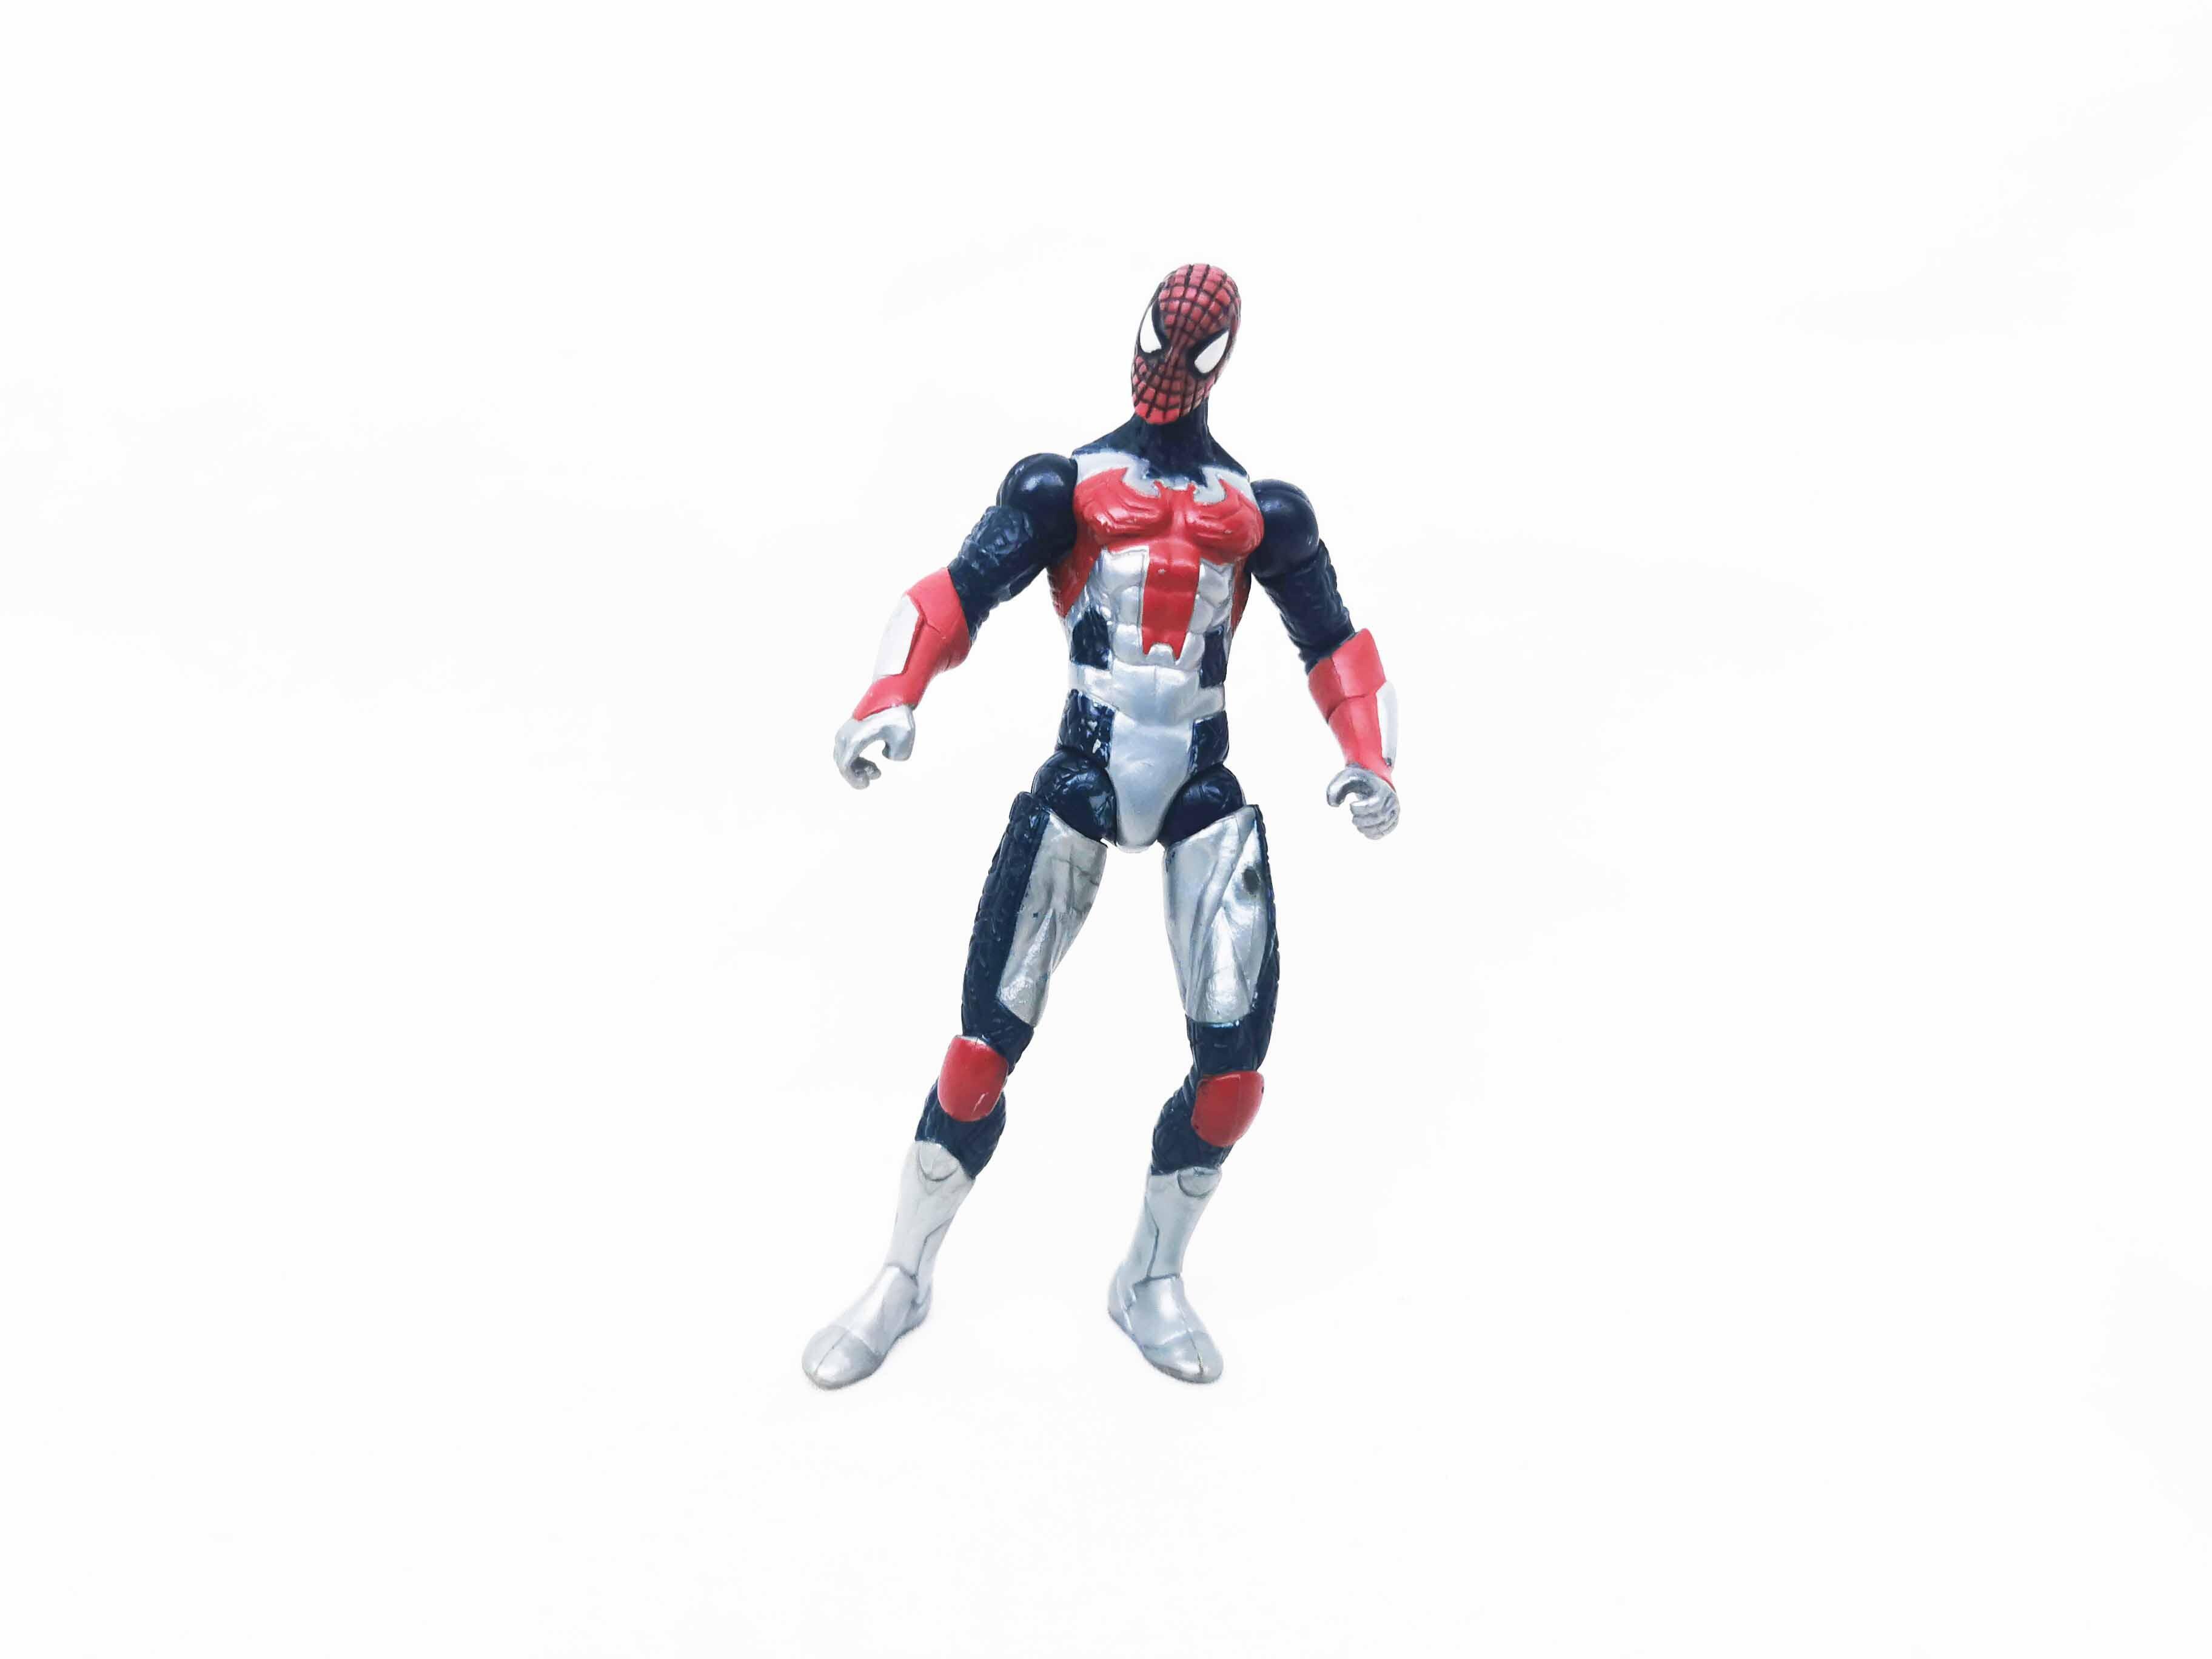 Shock Proof Spider-Man Movie Marvel Universe Action figure 3.75" Hasbro